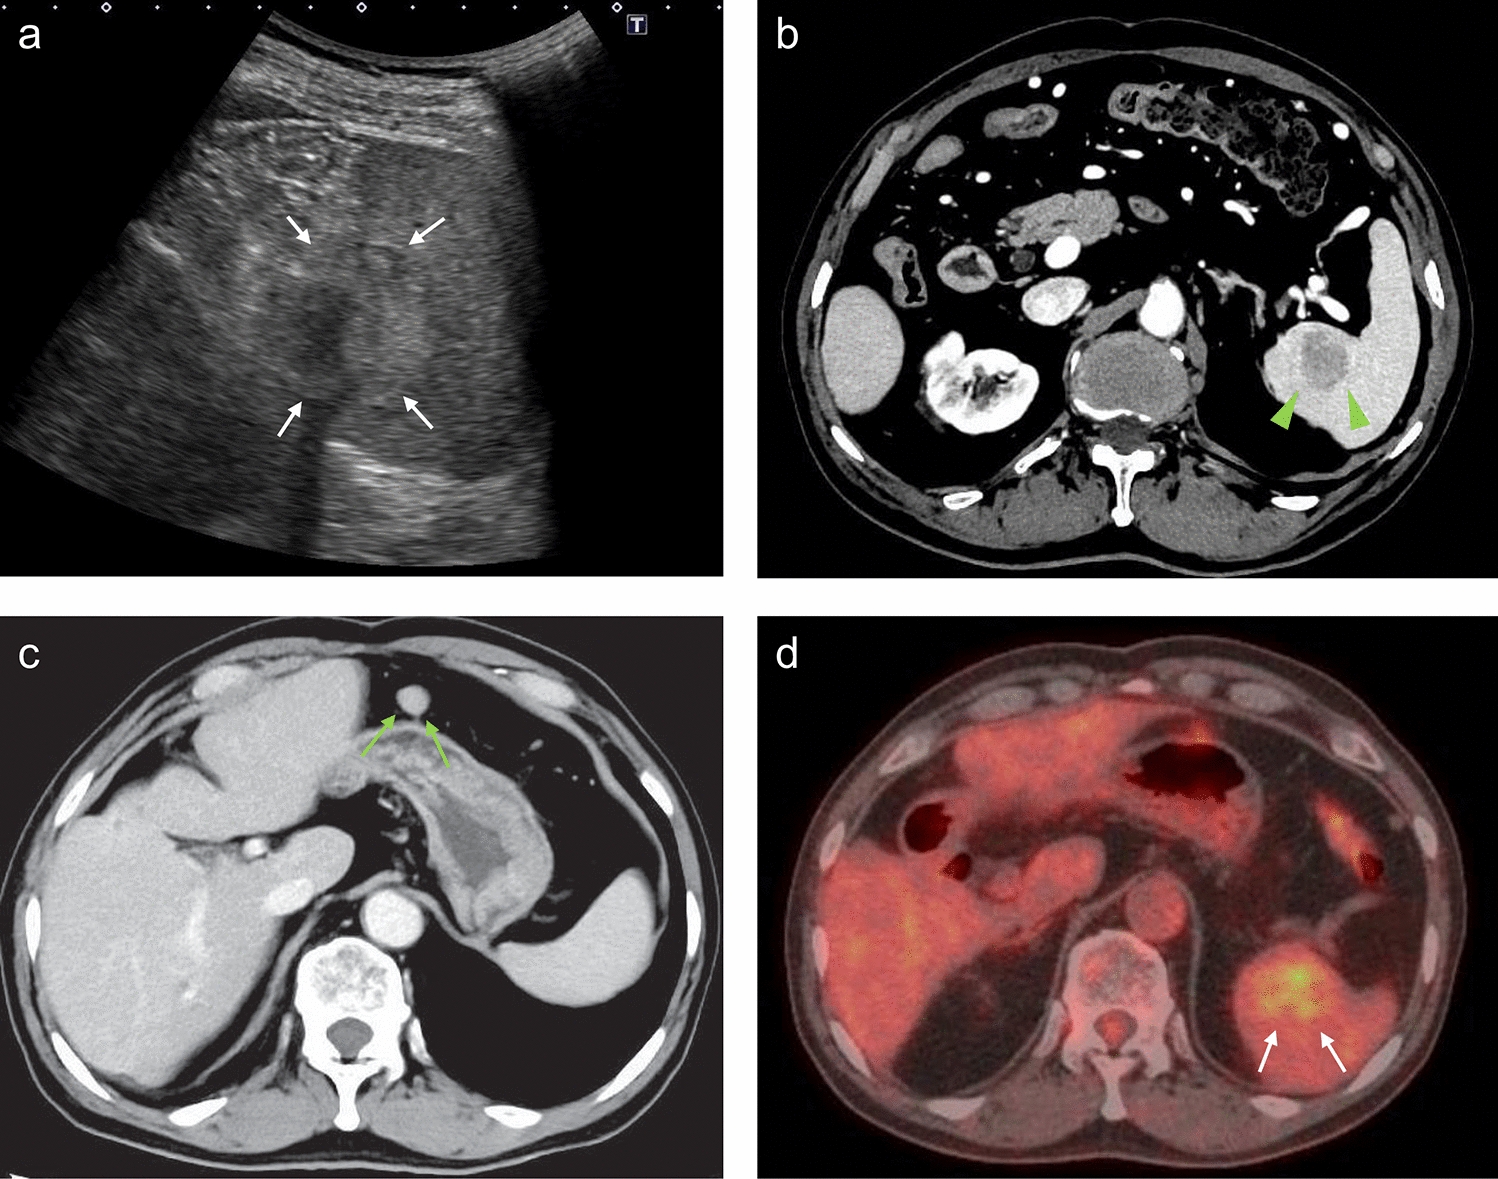 Spontaneous rupture of splenic hilar lymph node metastasis from hepatocellular carcinoma